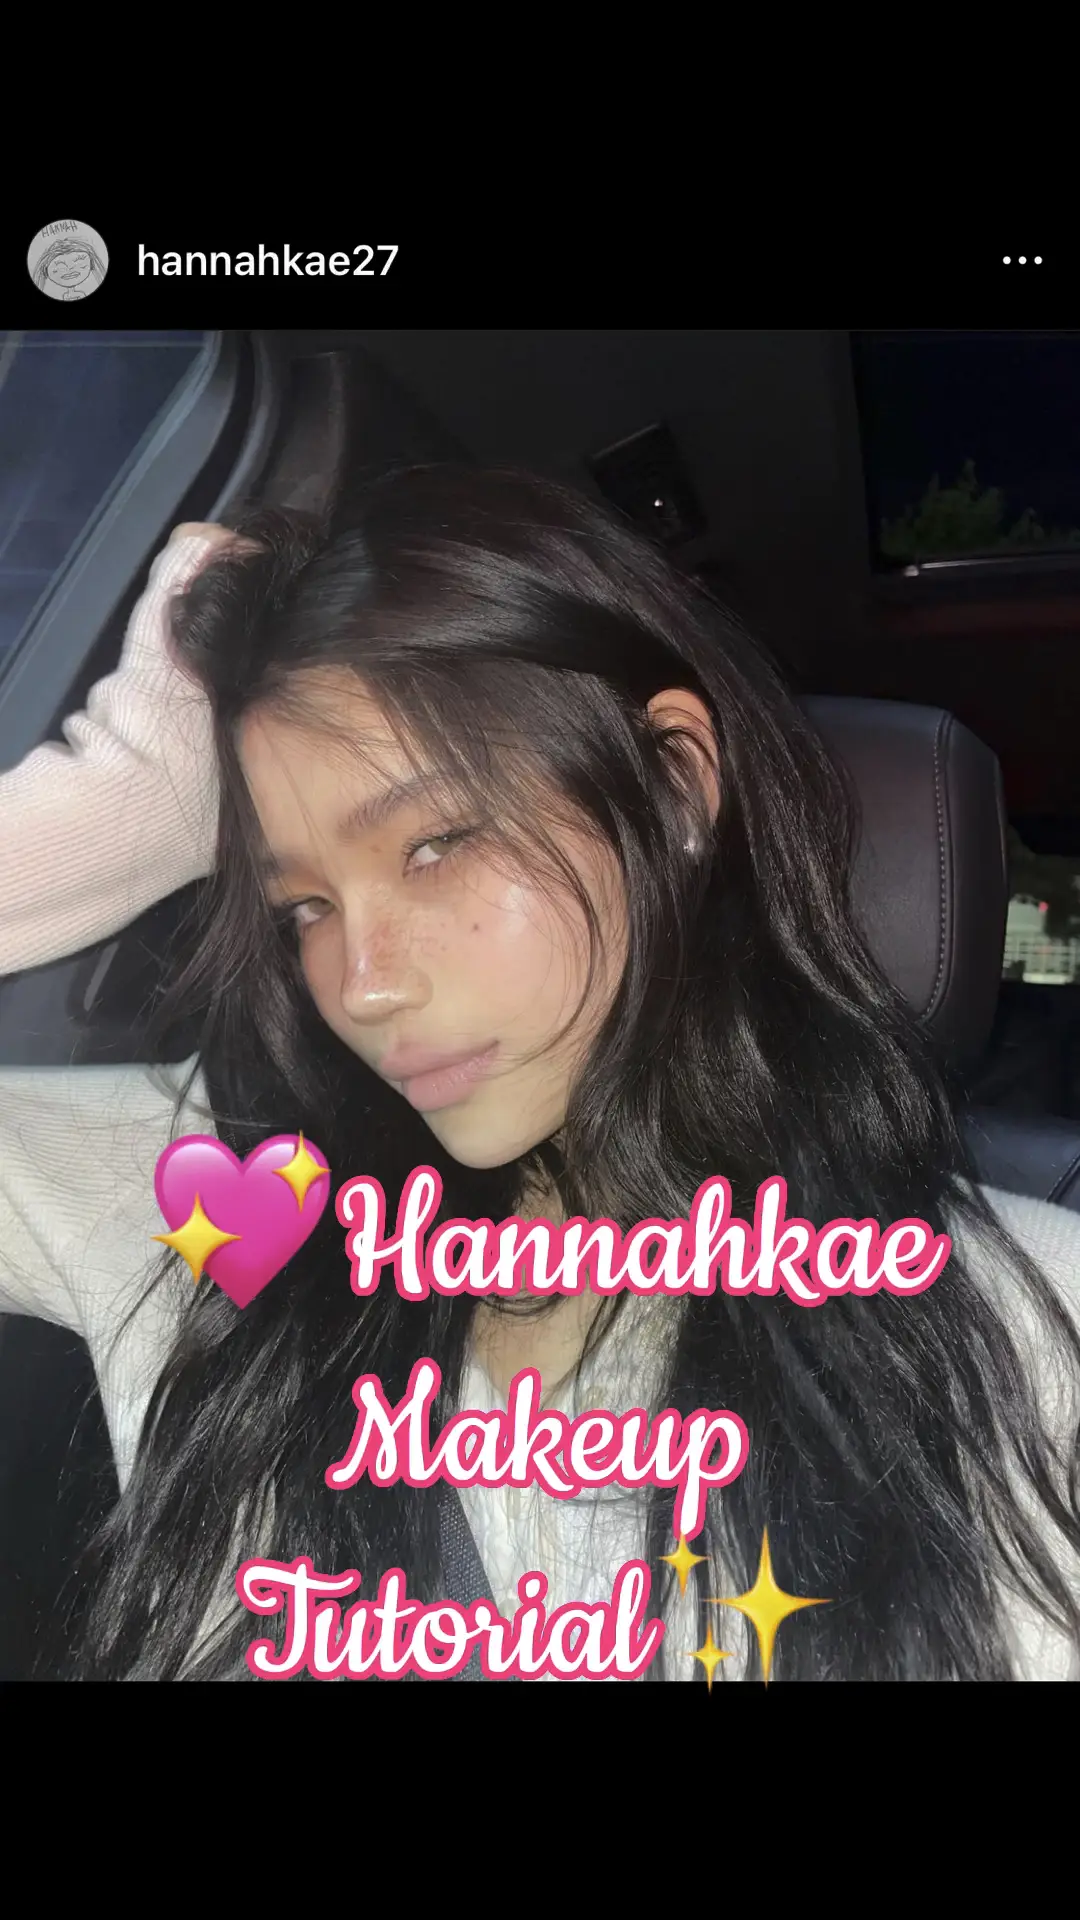 hannahkae makeup | Video published by ยูซุ | Lemon8